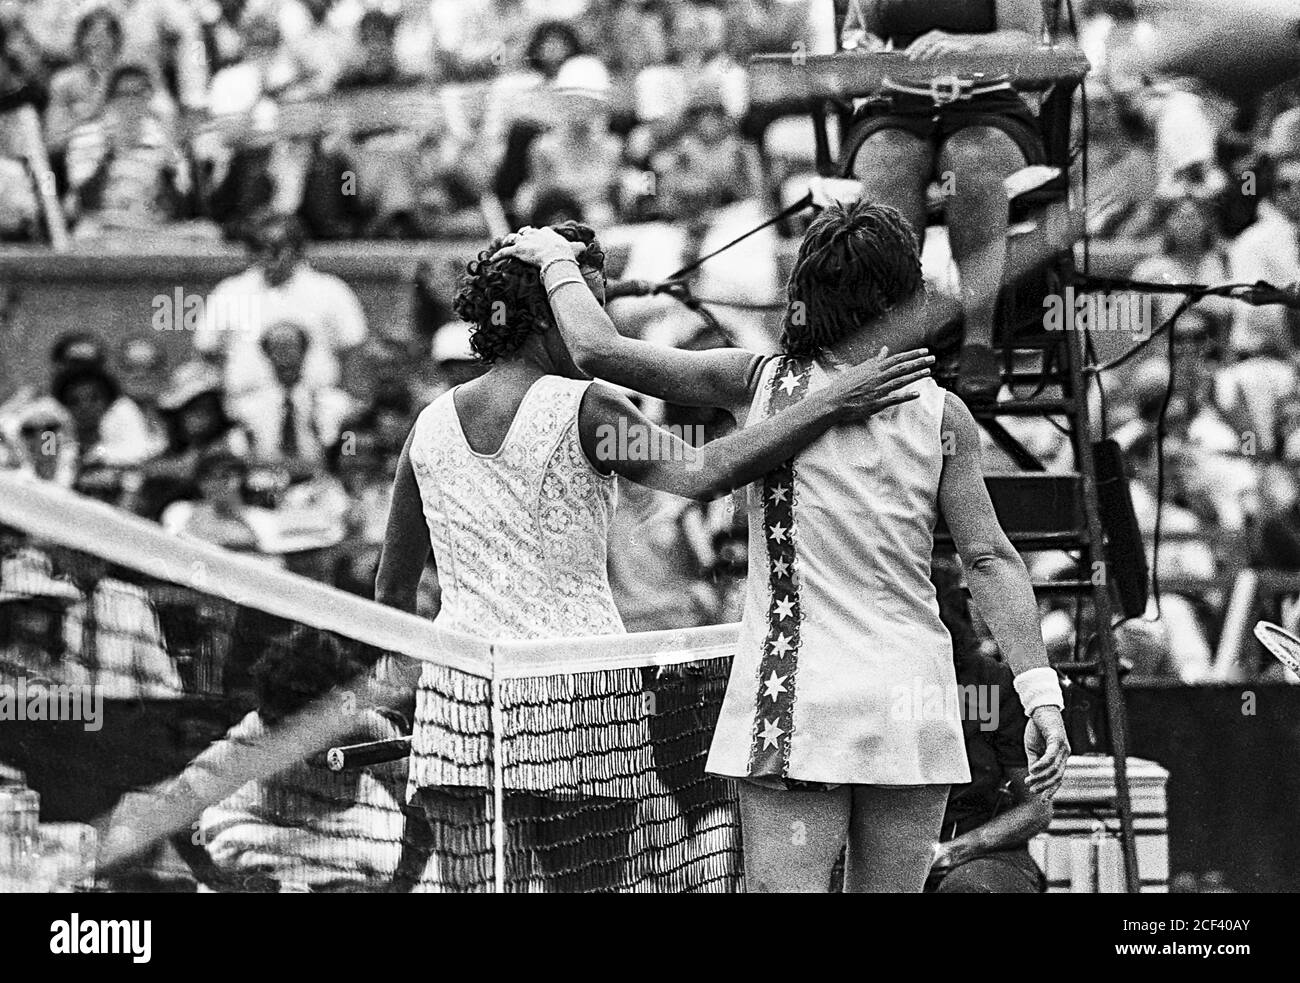 Billie Jean King (USA)  -R- defeats Evonne Goolagong (AUS) for the 1974 US Open Tennis championship. Stock Photo